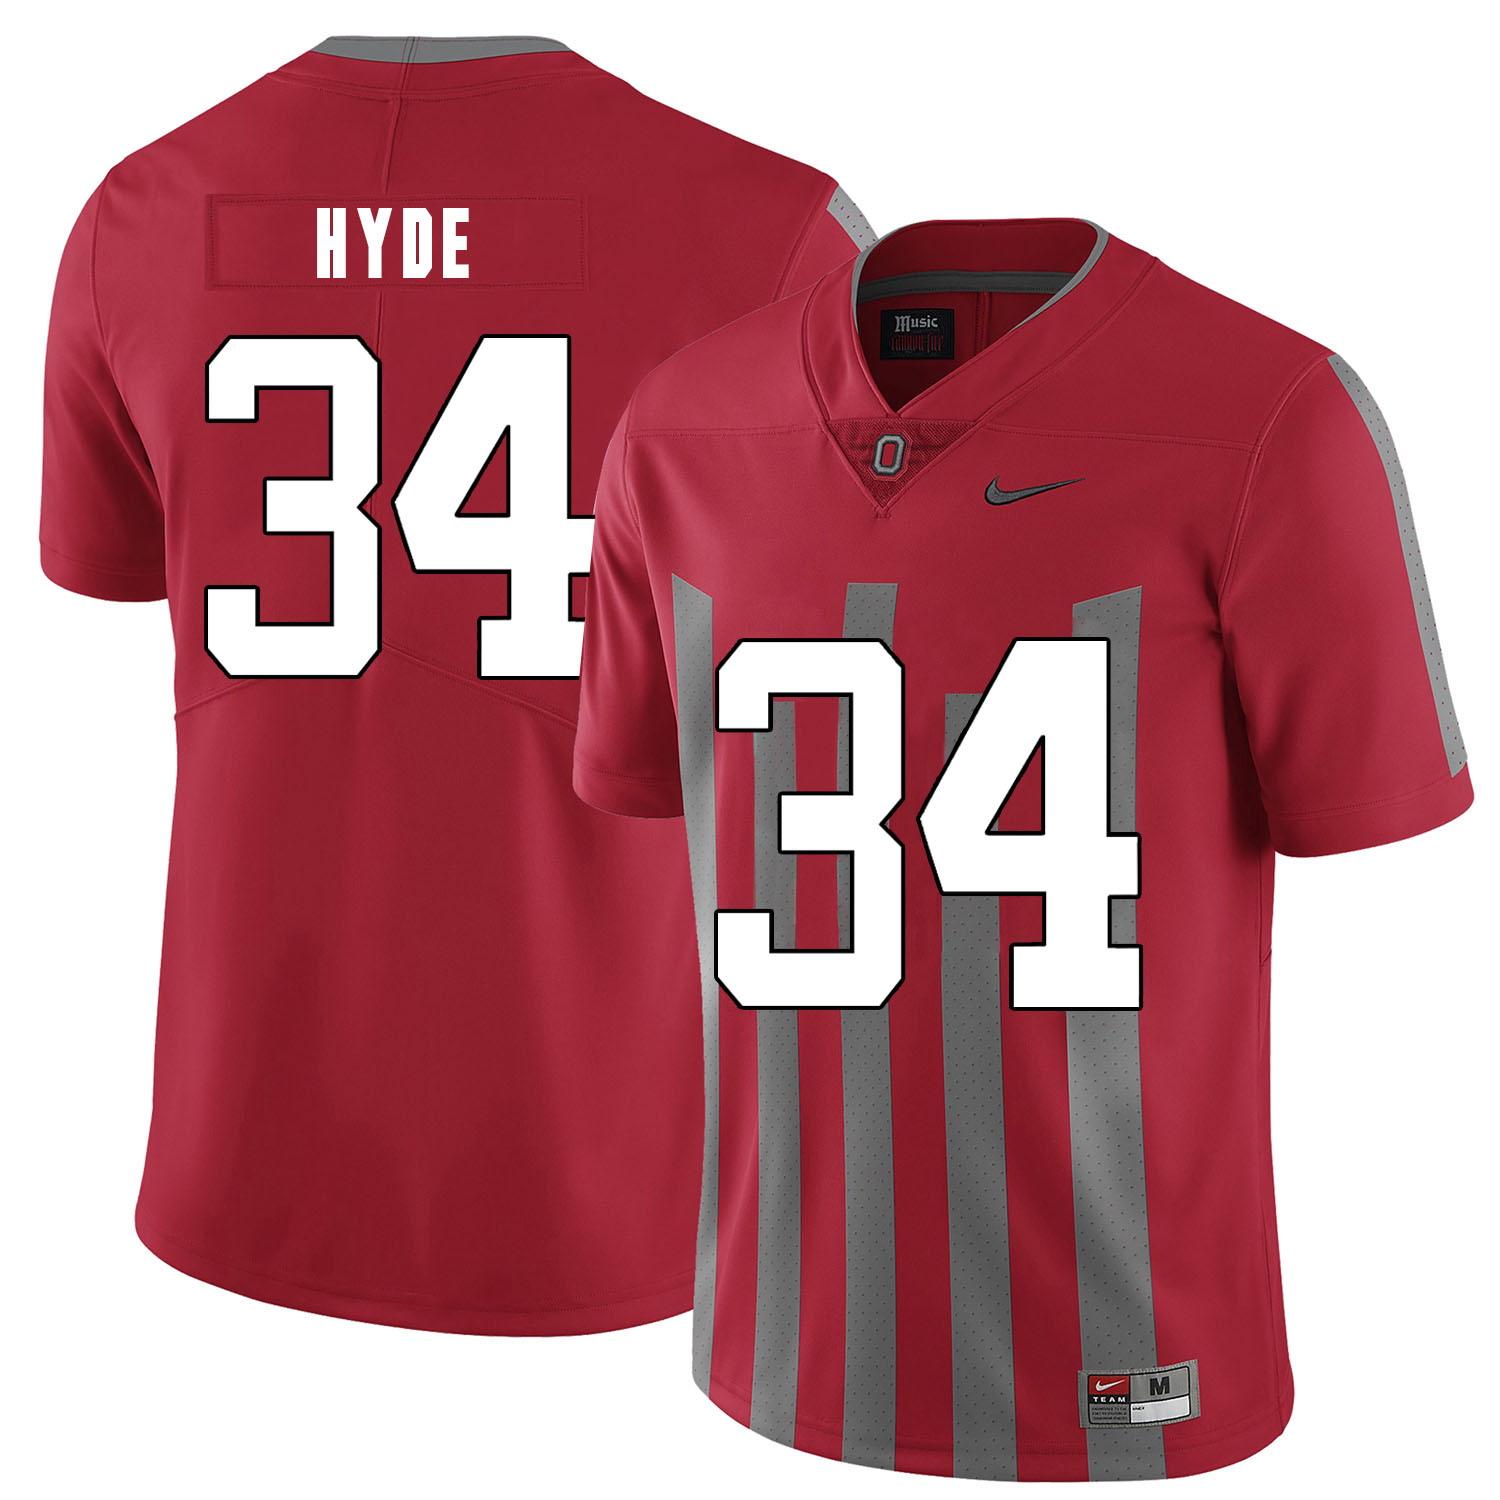 Ohio State Buckeyes 34 Carlos Hyde Red Elite Nike College Football Jersey